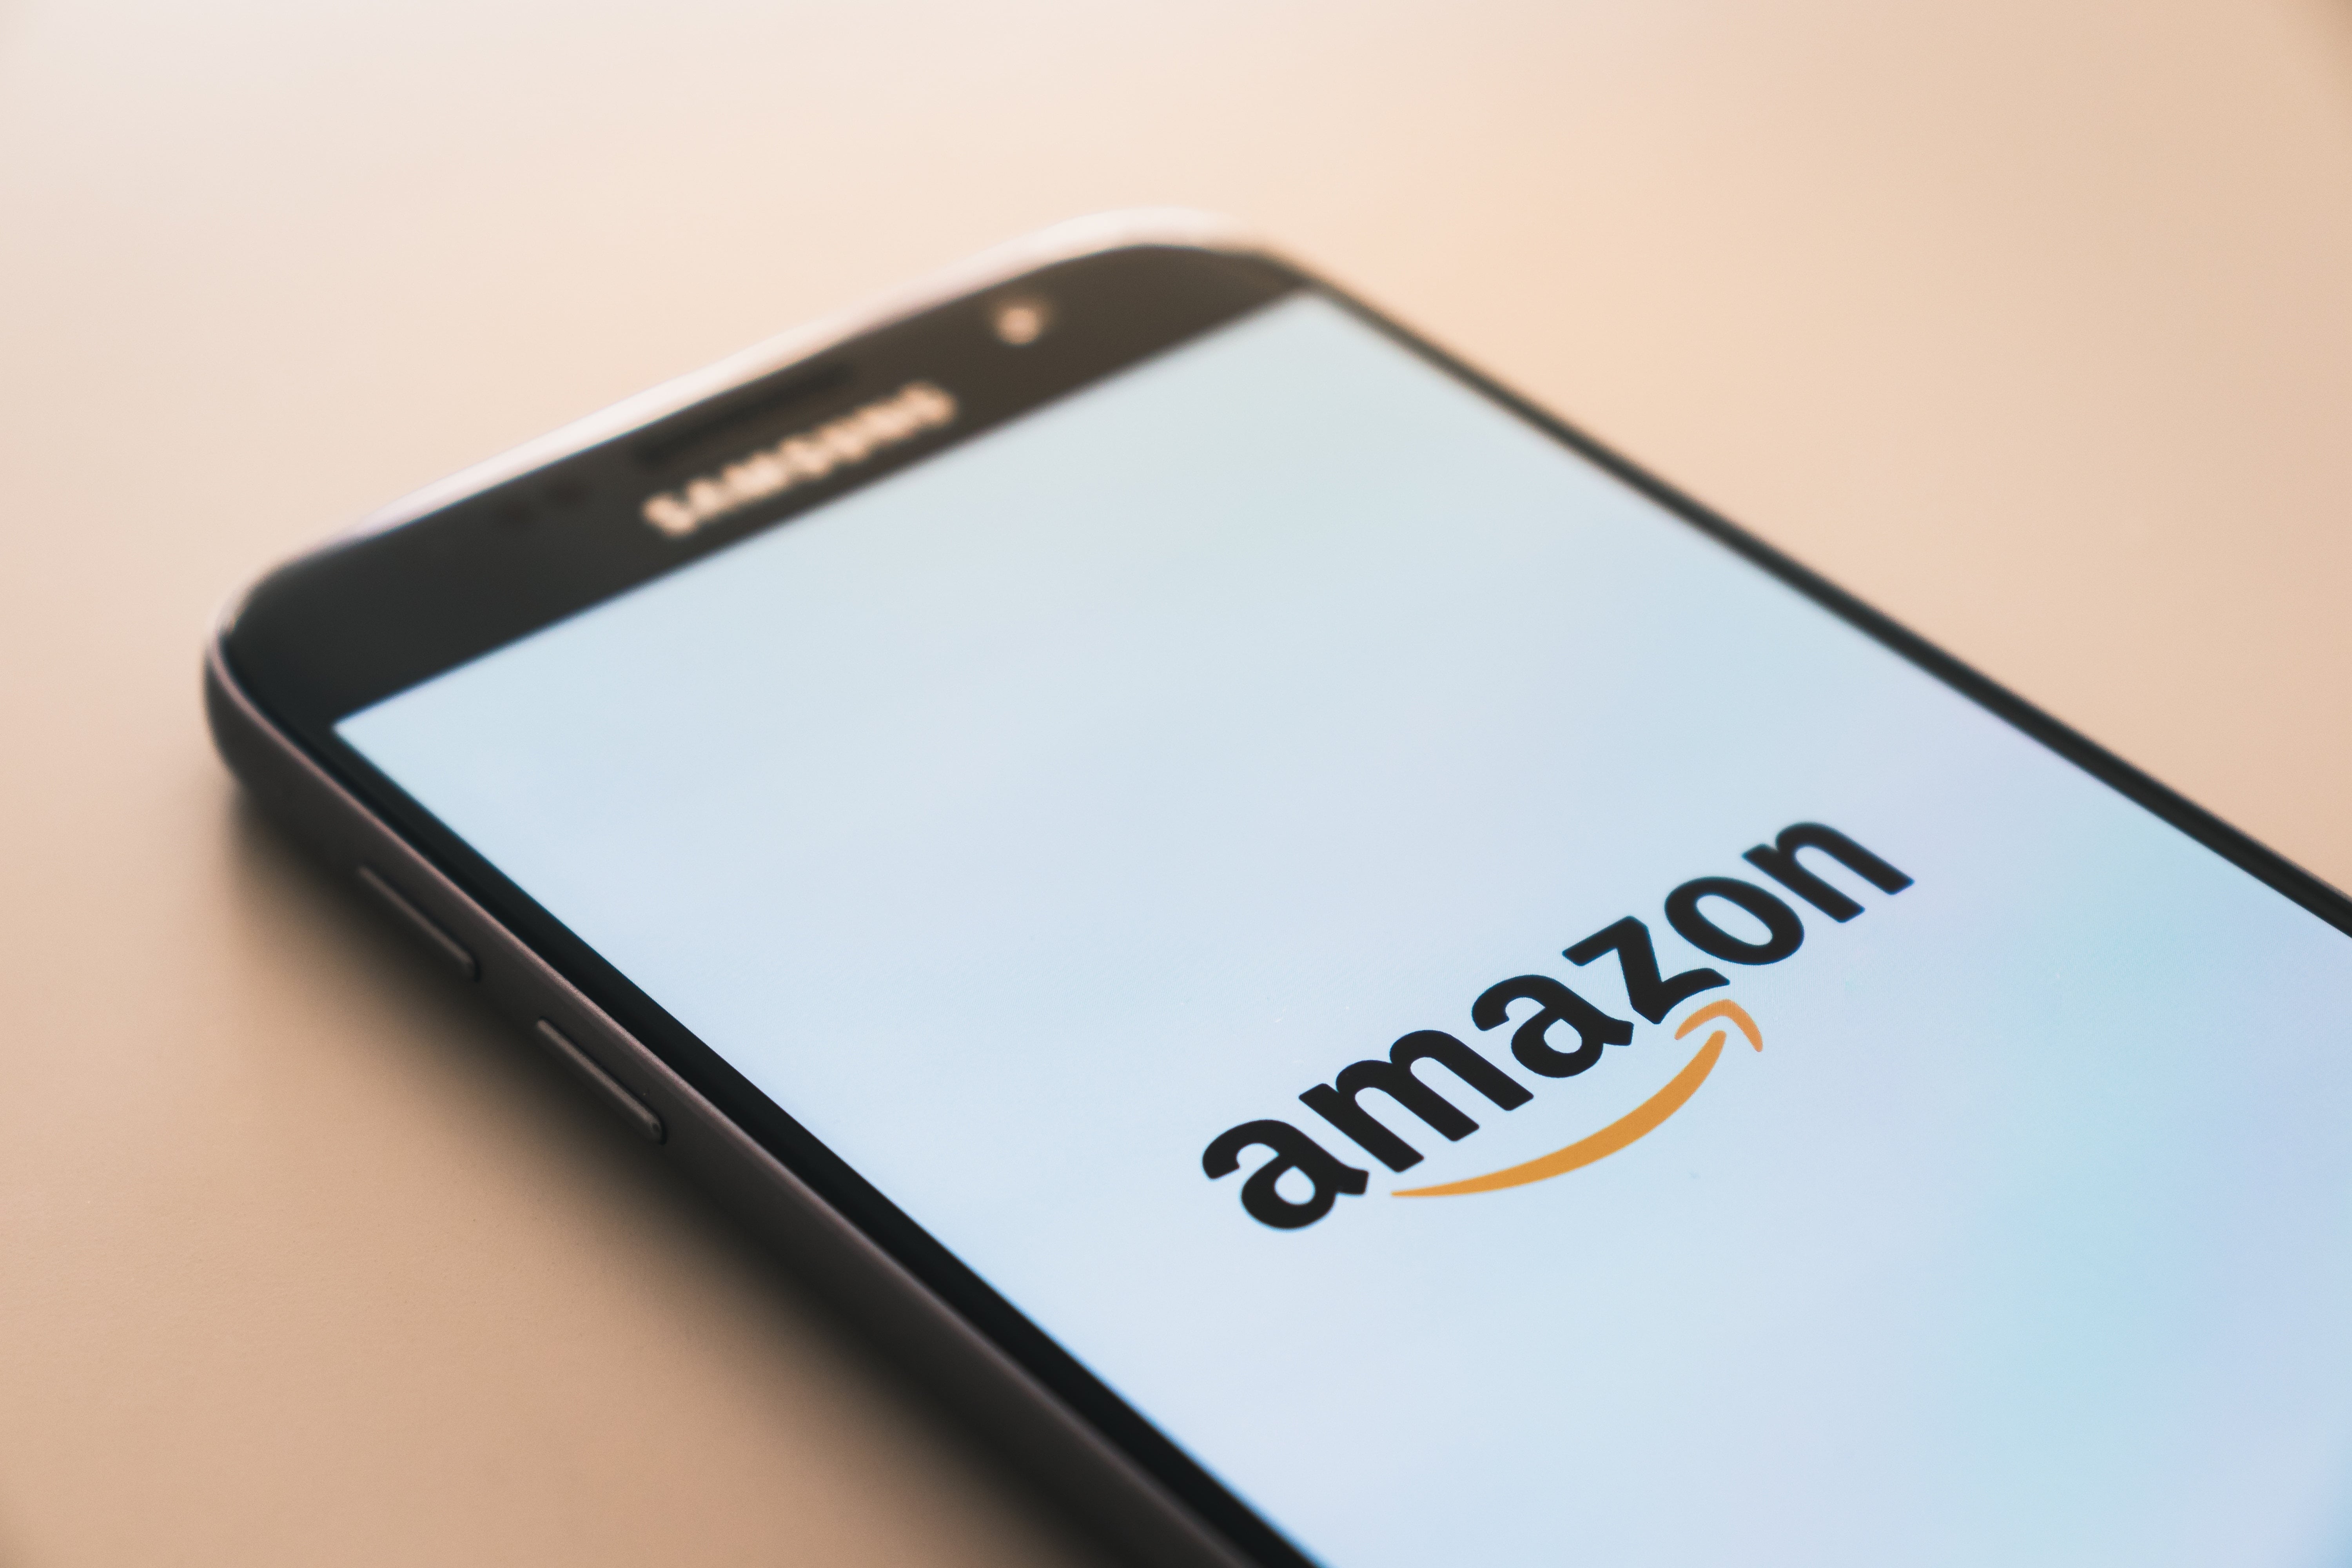 Brad Roemer speaks of the benefits of Amazon Prime